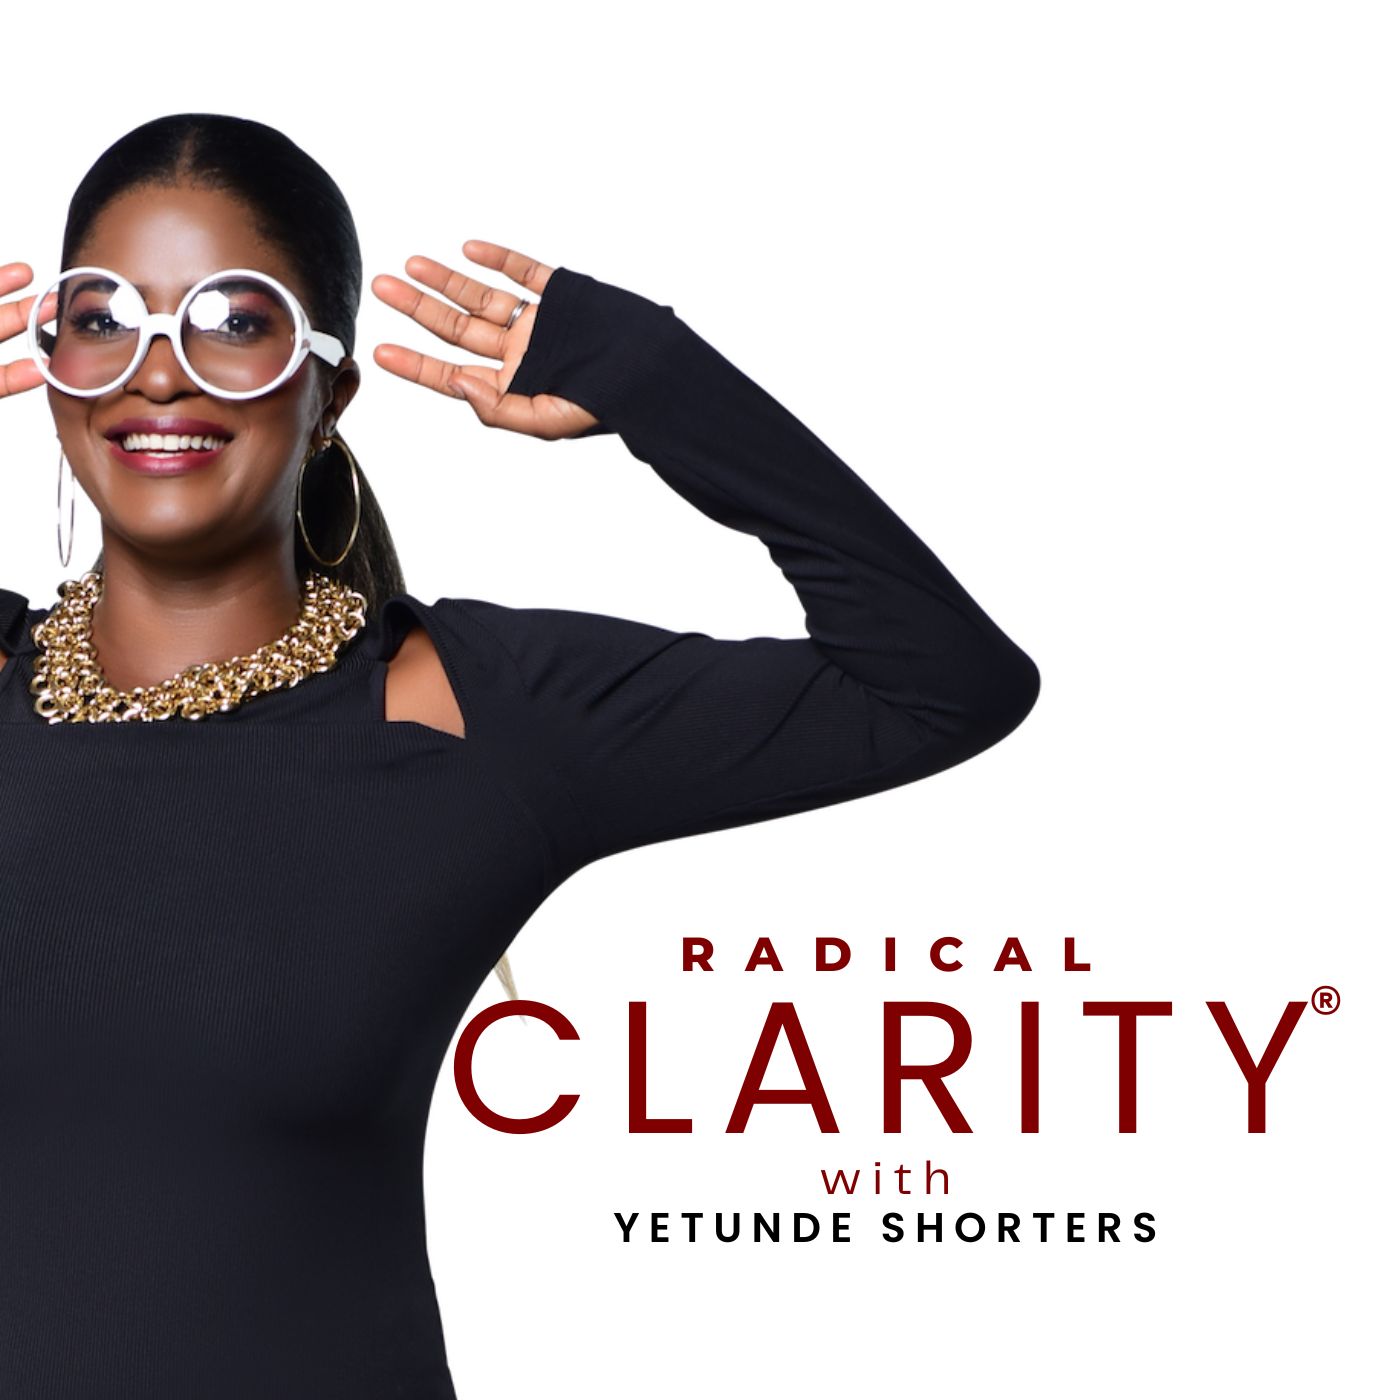 Radical clarity with yedude shorters.